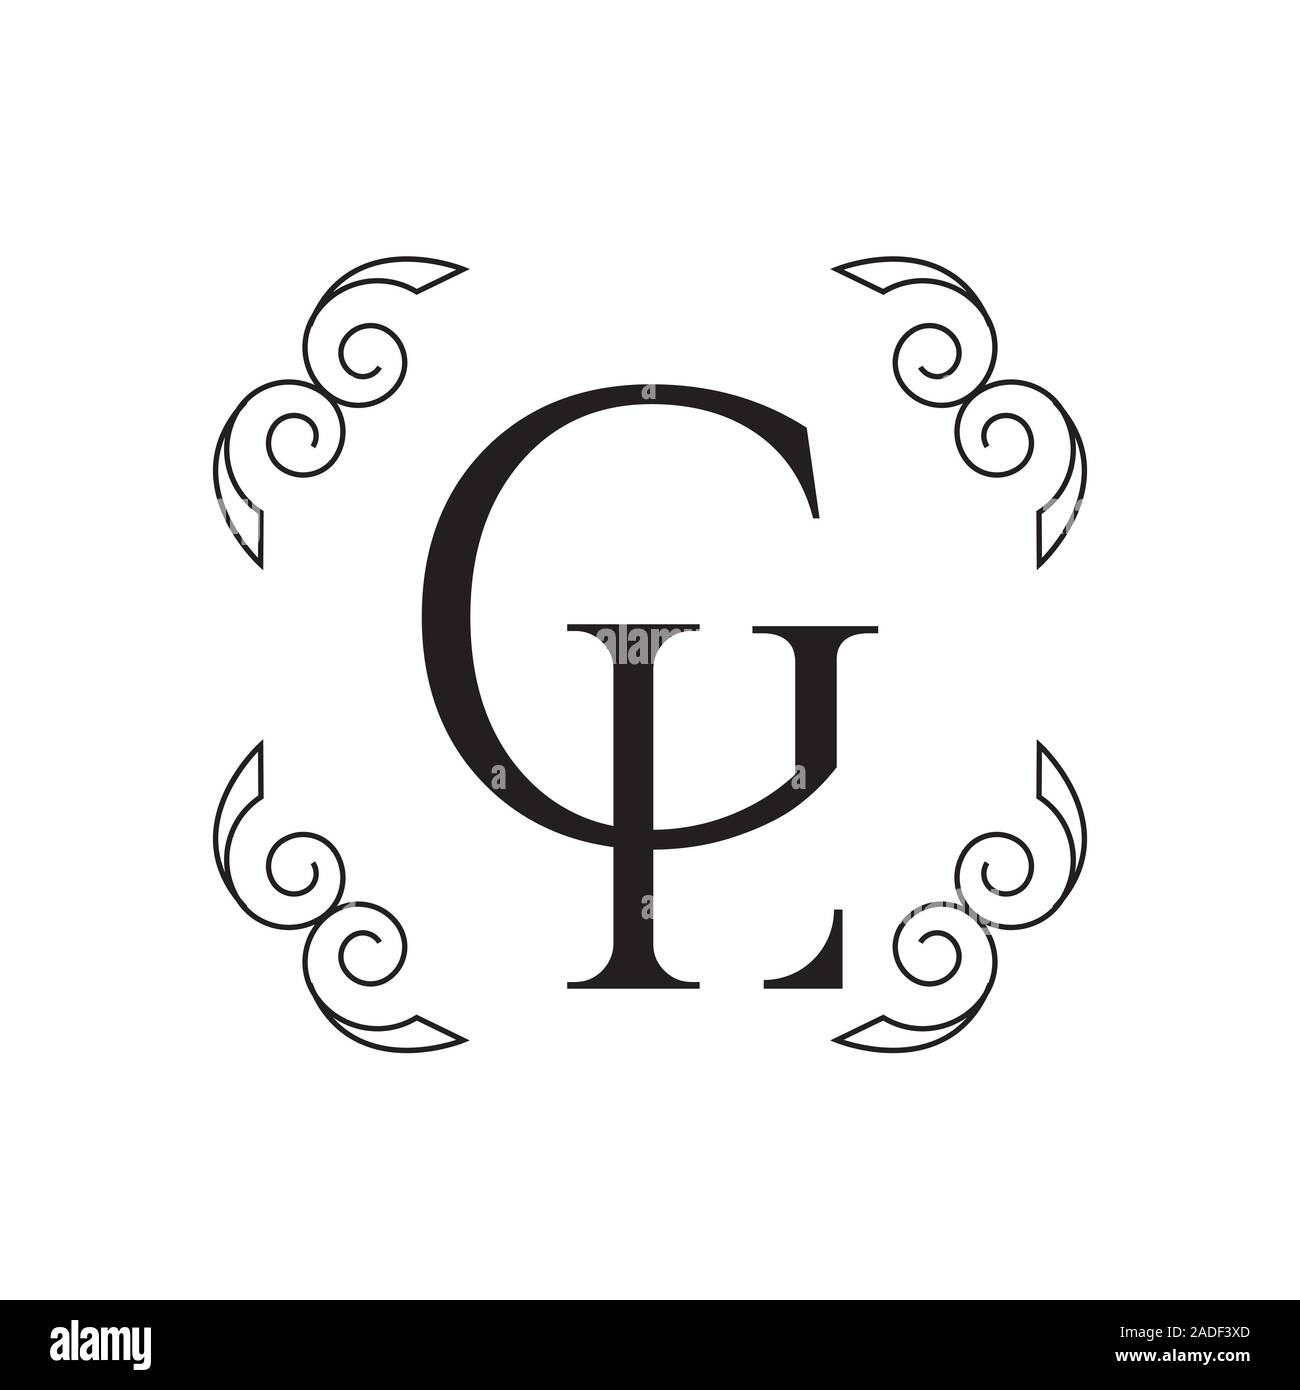 G L Vector Logo Gl Design Letters G L Emblem Stock Vector Image Art Alamy